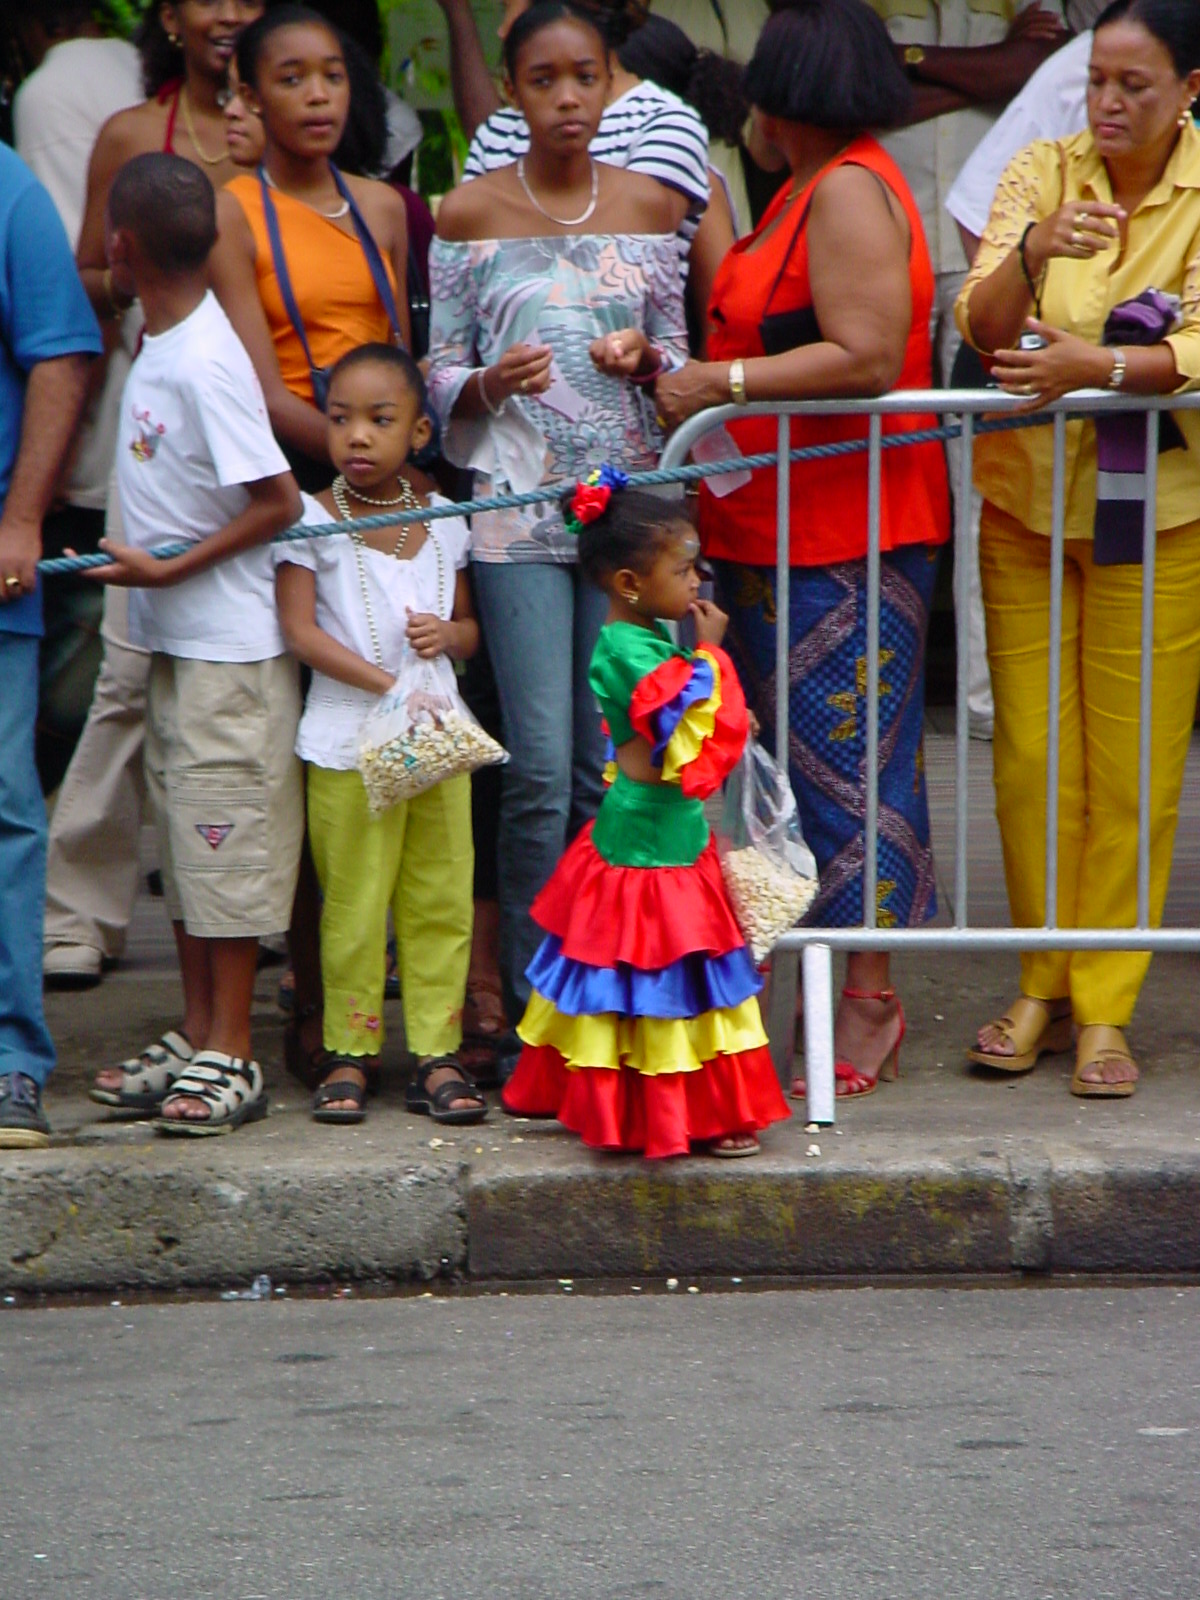 Carnaval de Guyane à Cayenne